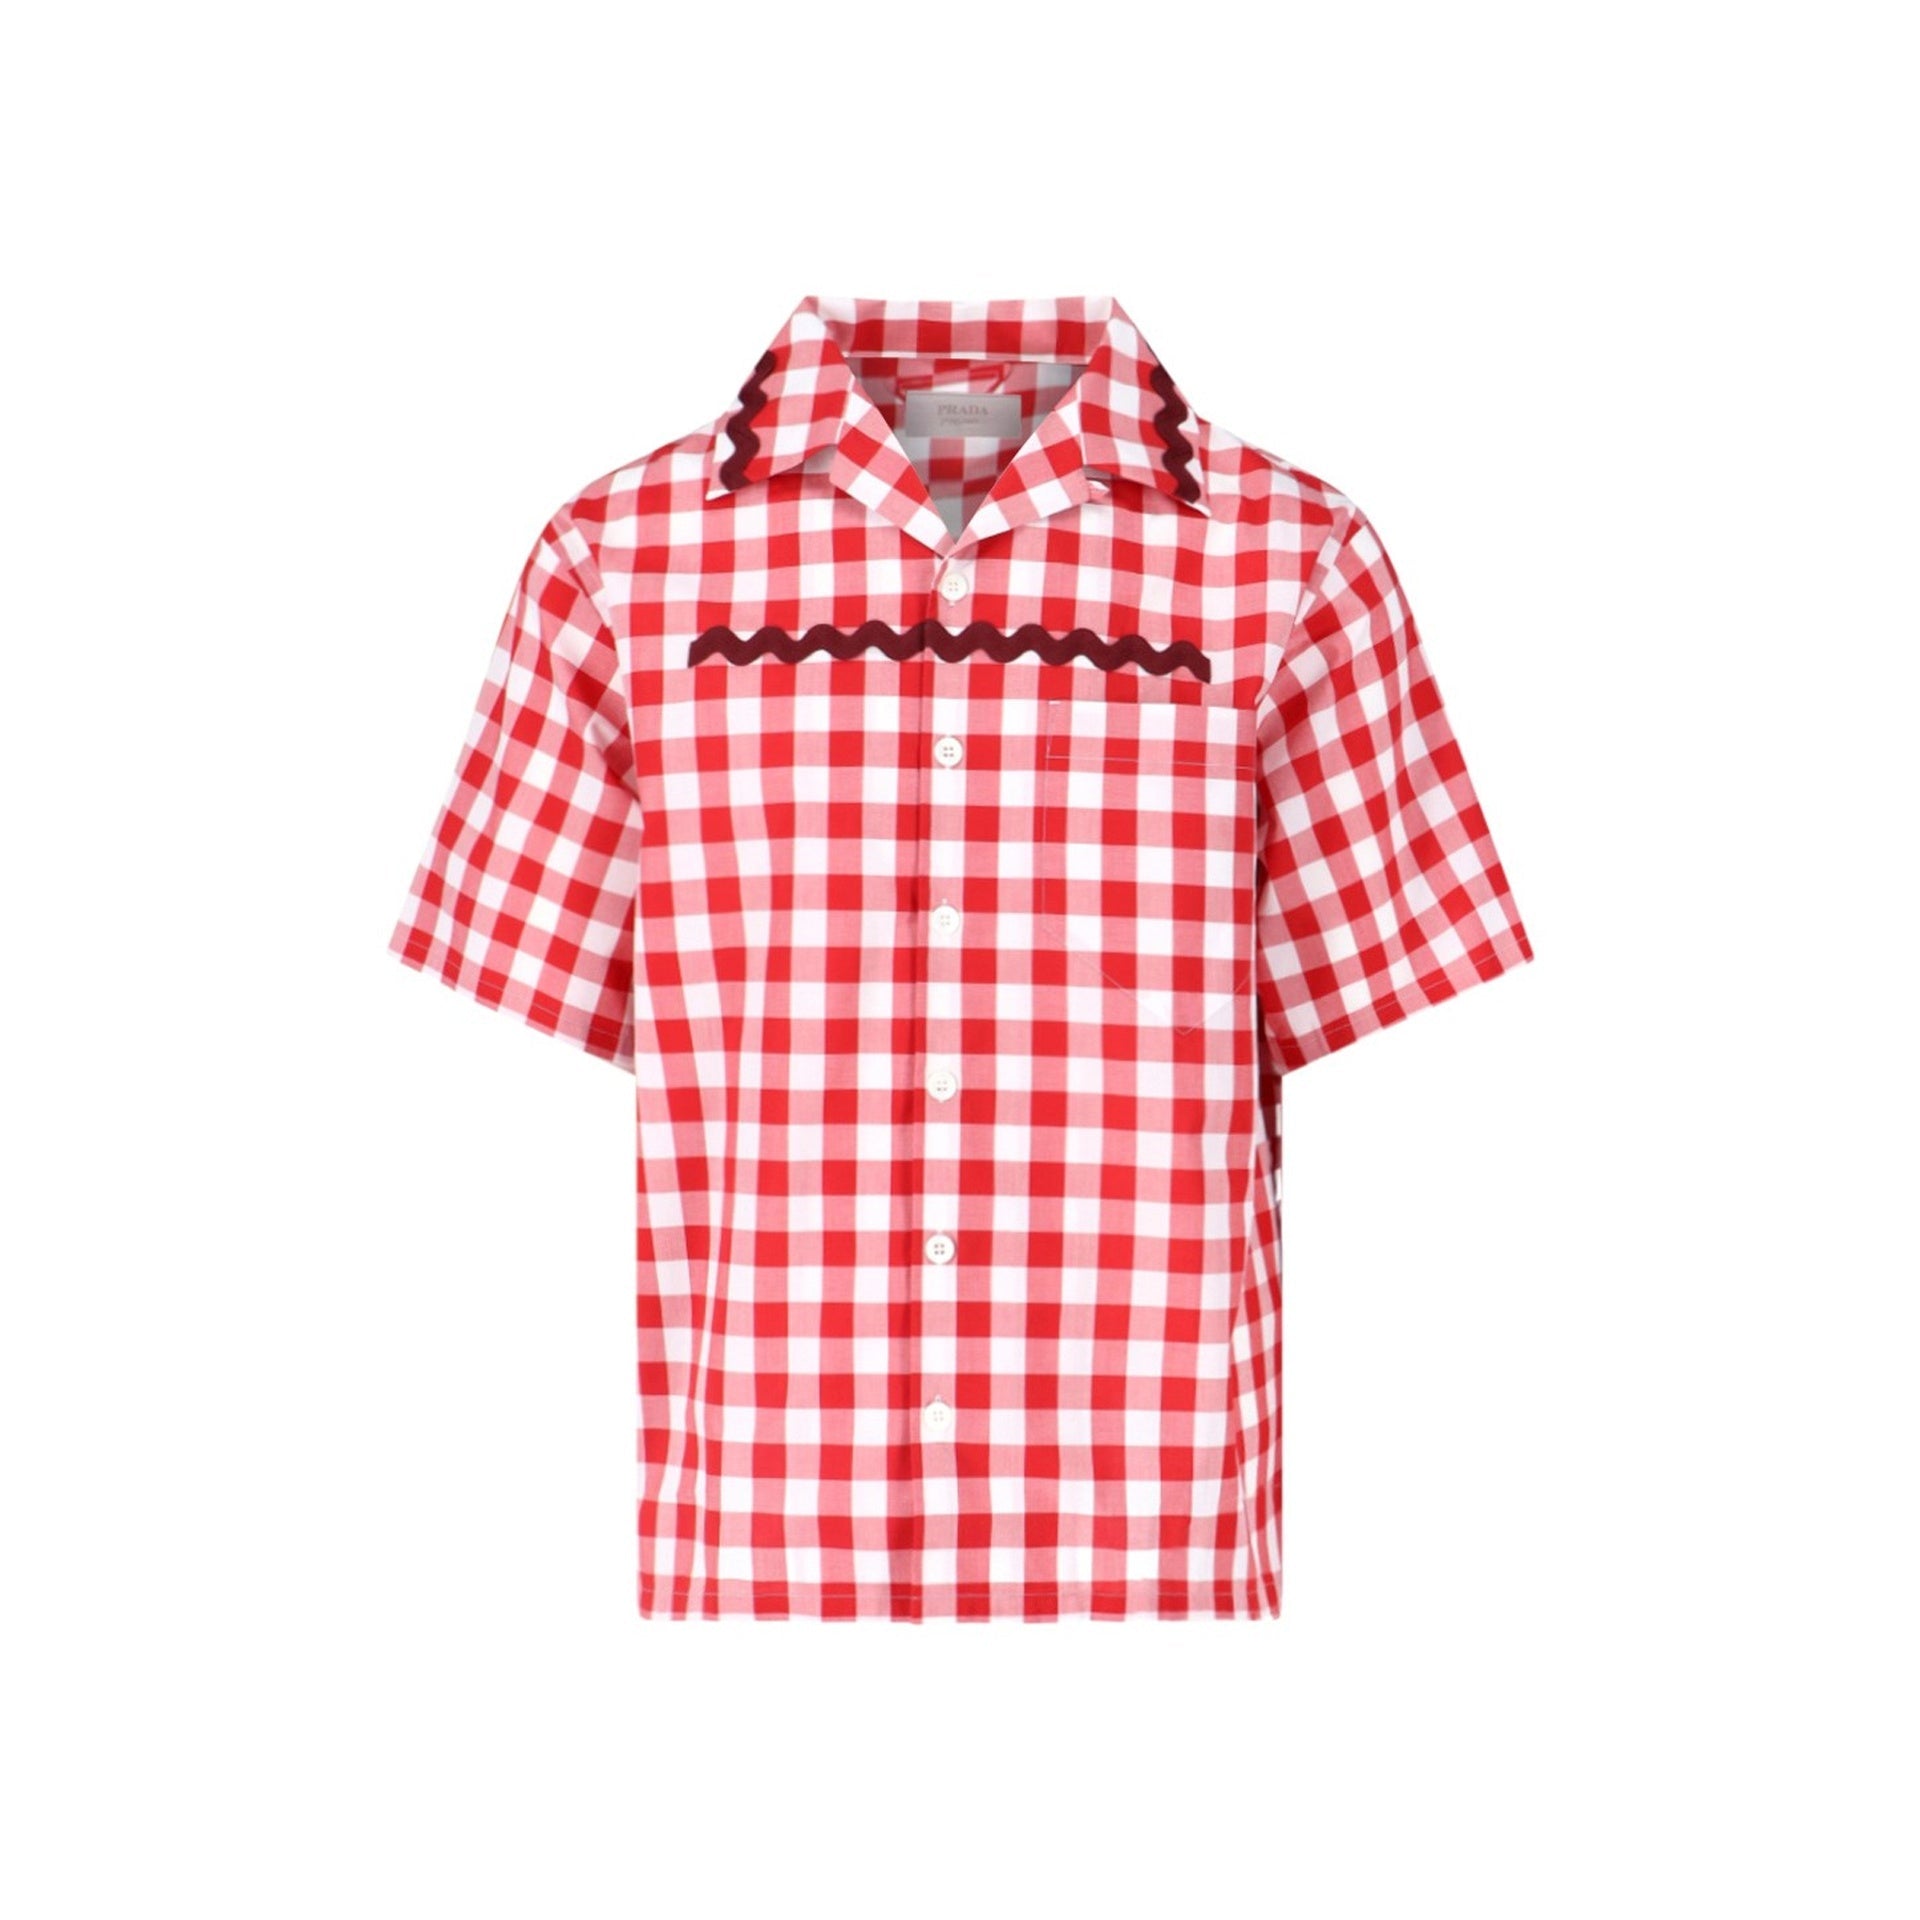 PRADA-Outlet-Sale-Prada Checked Shirt-MEN CLOTHING-RED-L-ARCHIVIST